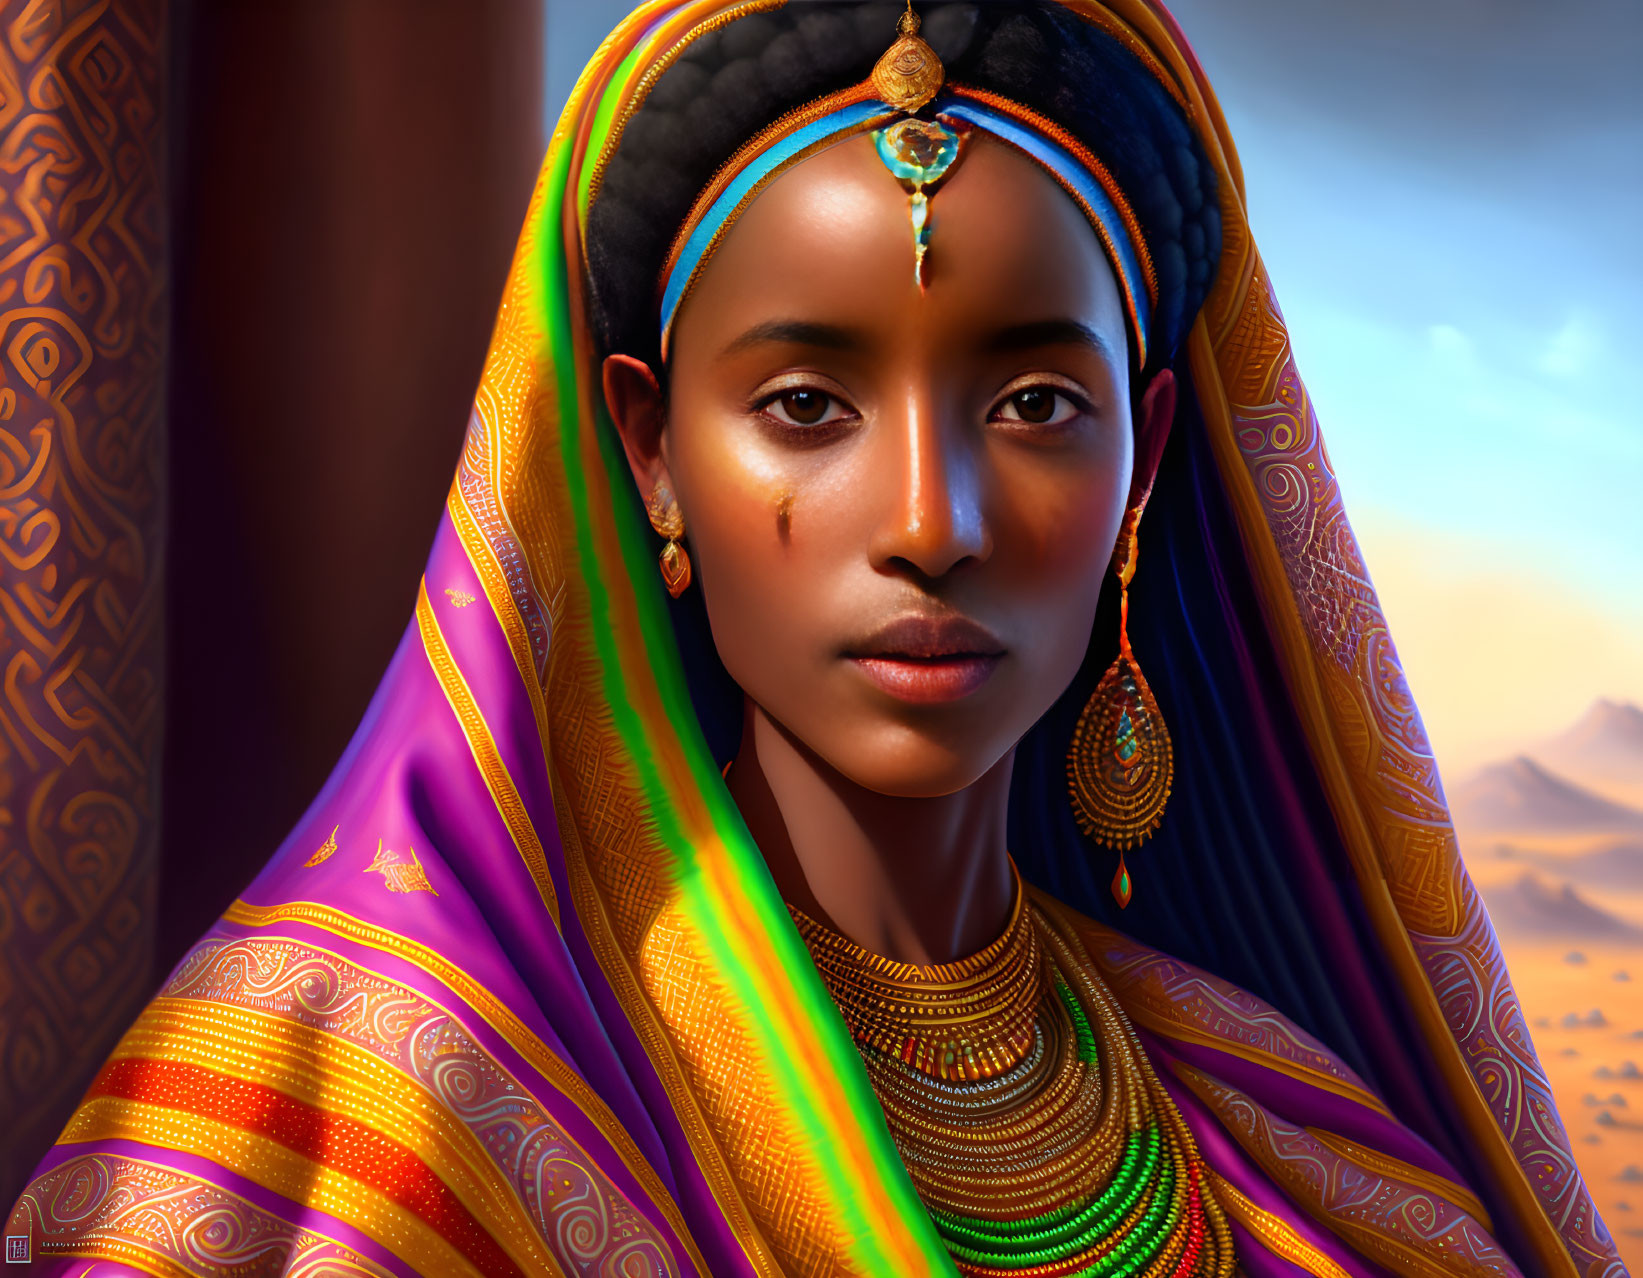 Vibrant traditional attire digital portrait of a woman in desert setting